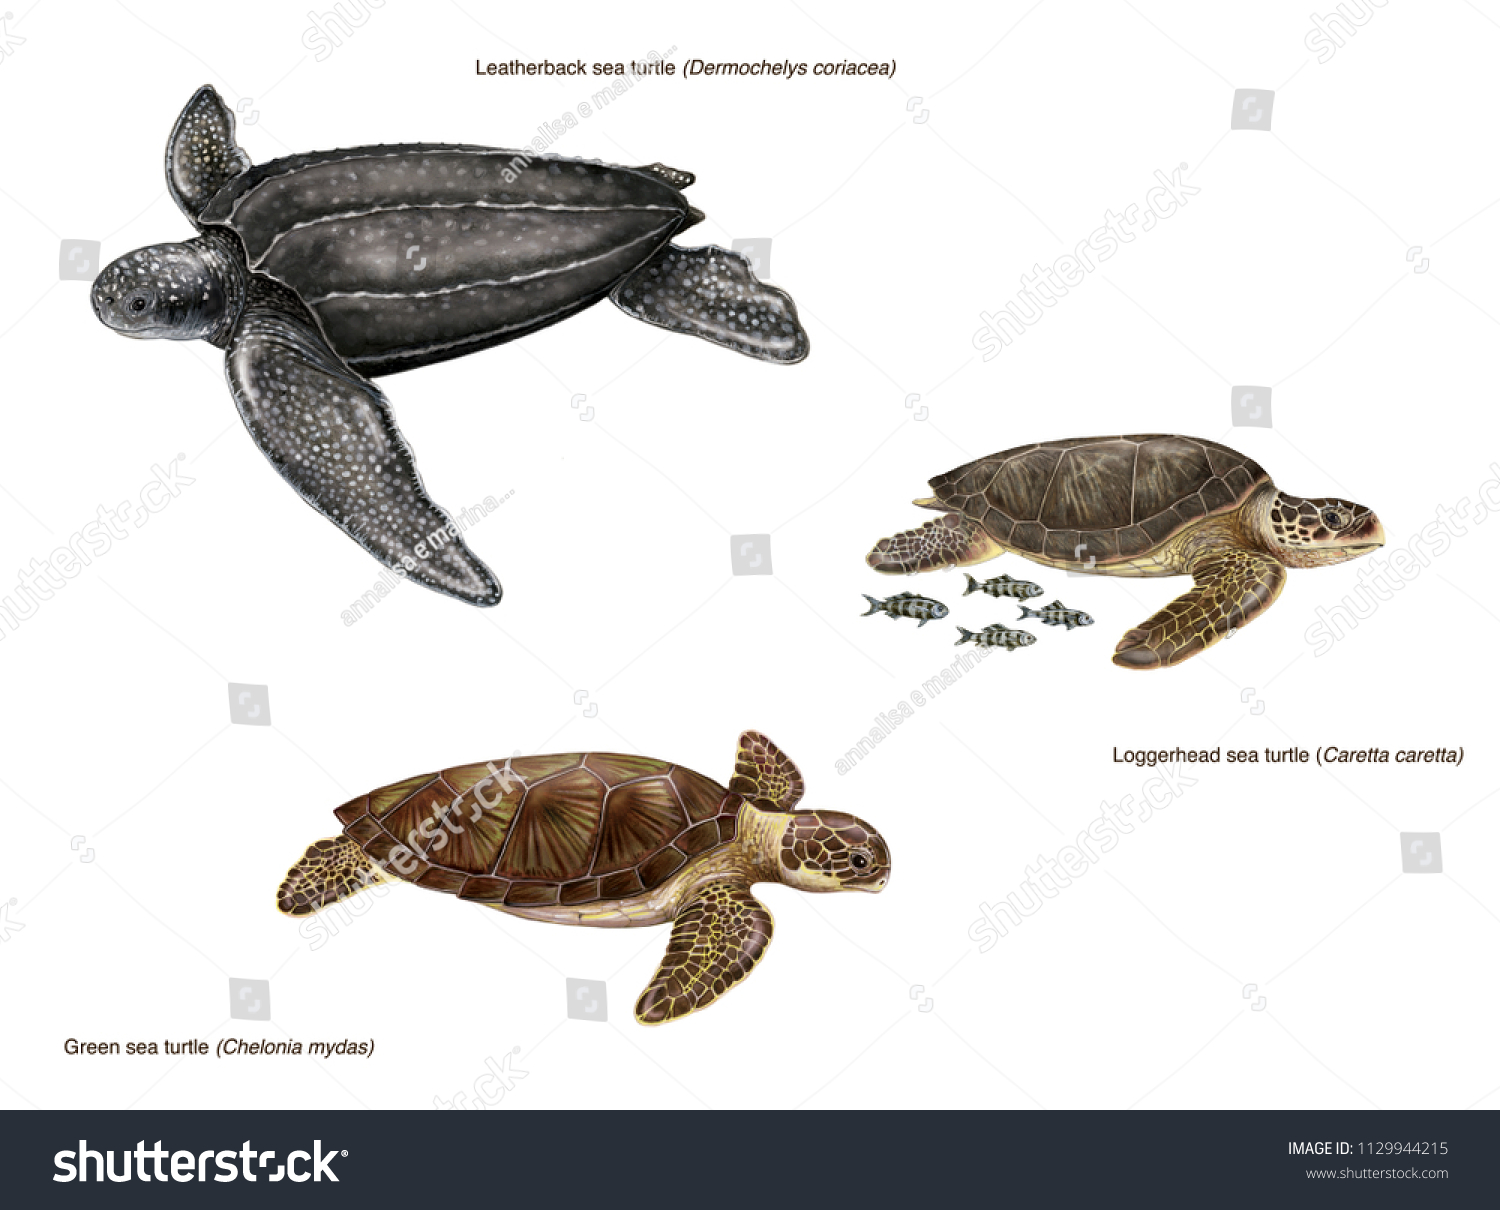 scientific illustration 3 species sea turtles stock illustration